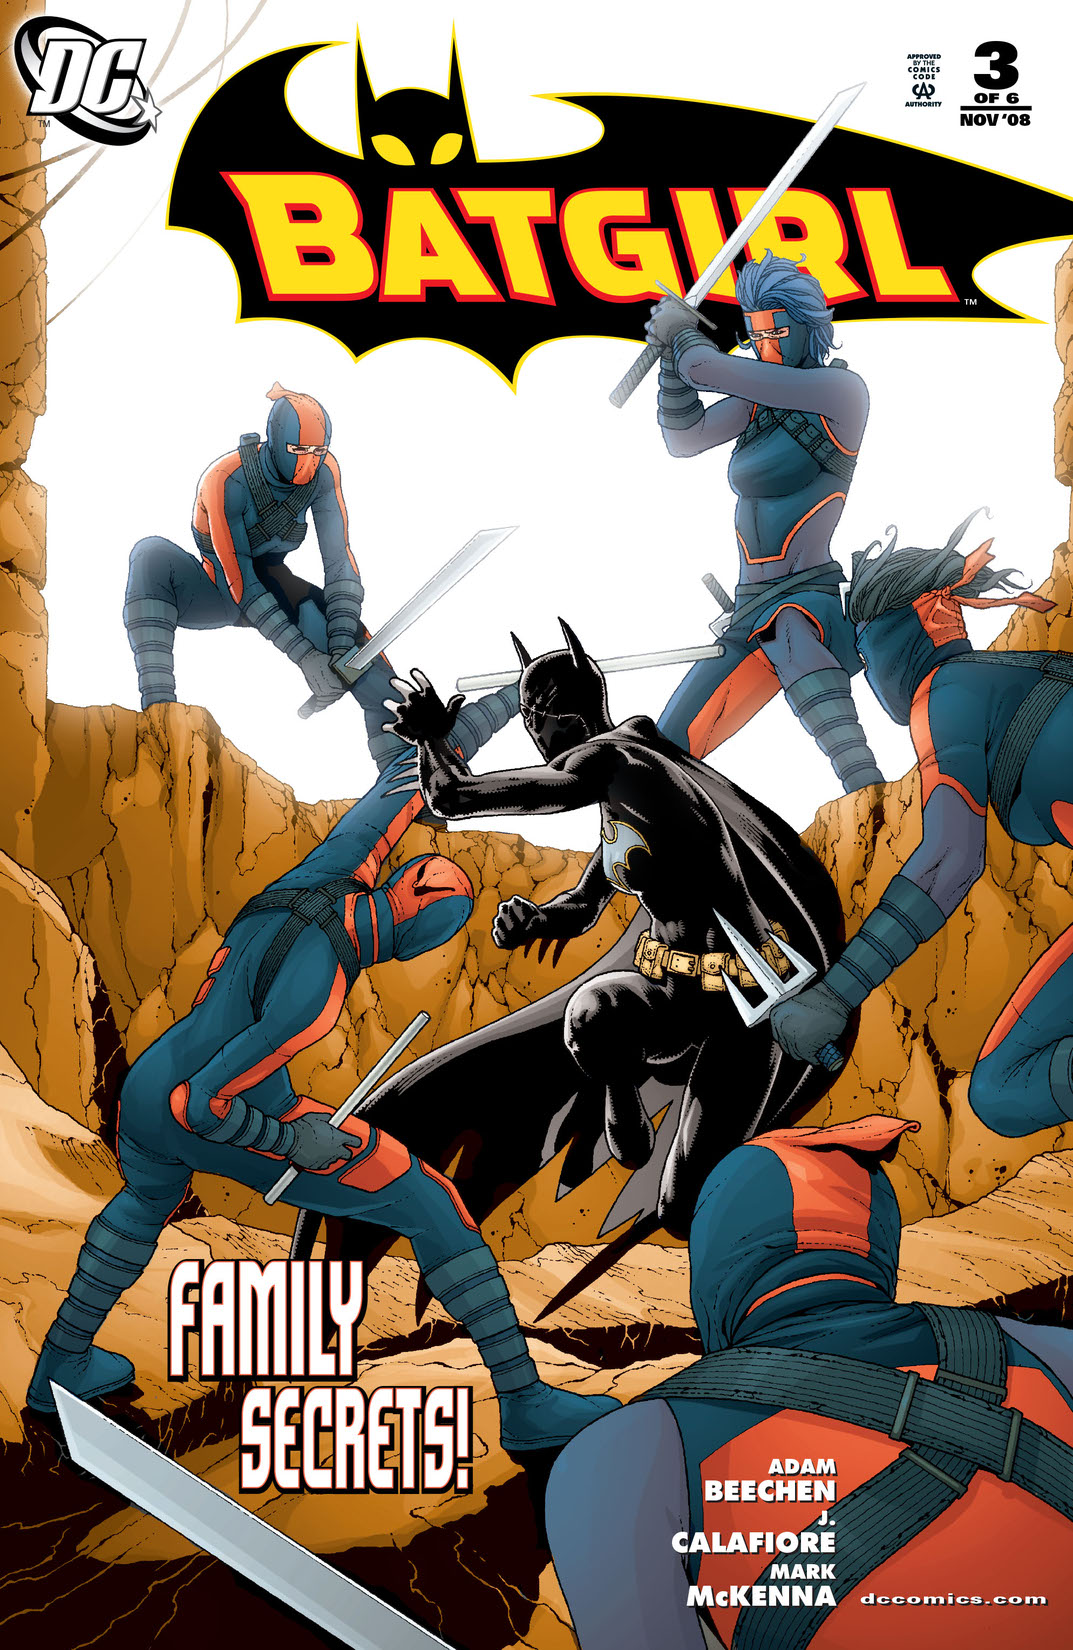 Batgirl (2008-) #3 preview images